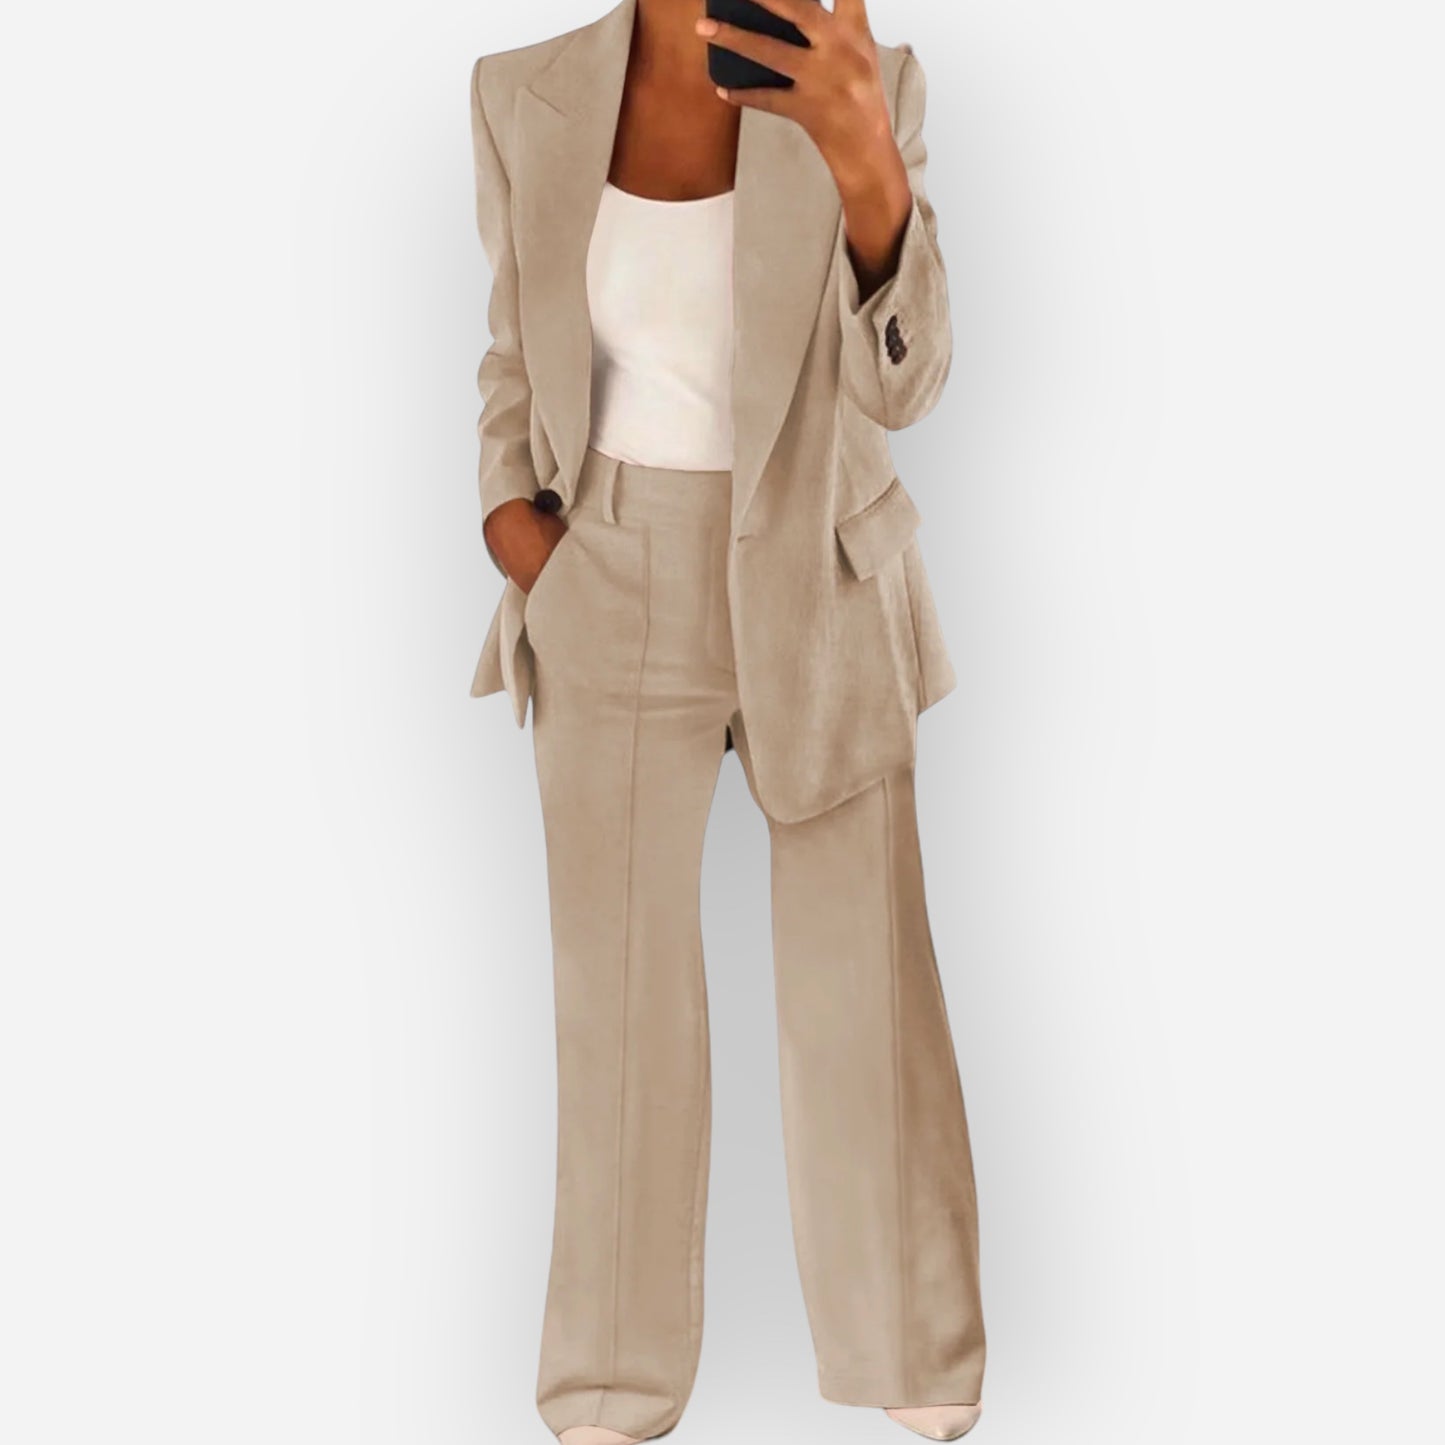 JASMINE - Completo elegante giacca e pantalone